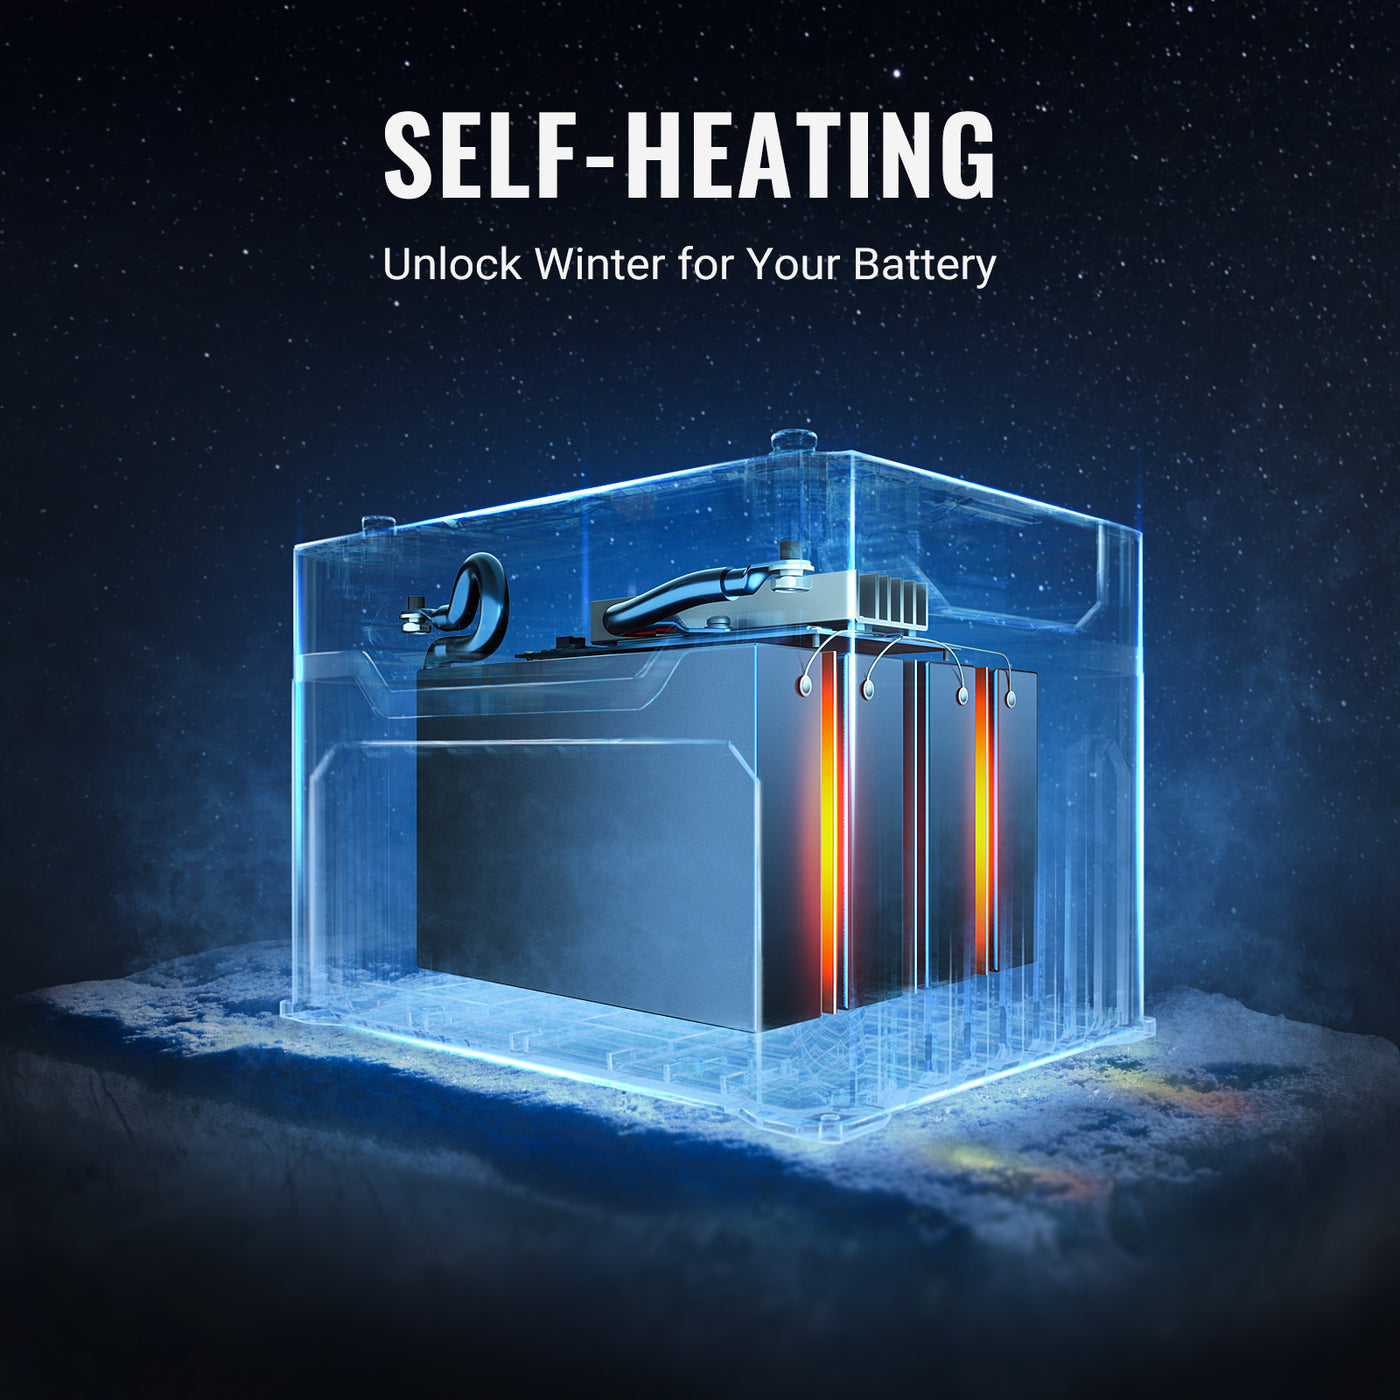 12V 1280Wh/100Ah Self-Heating LiFePO4 Battery